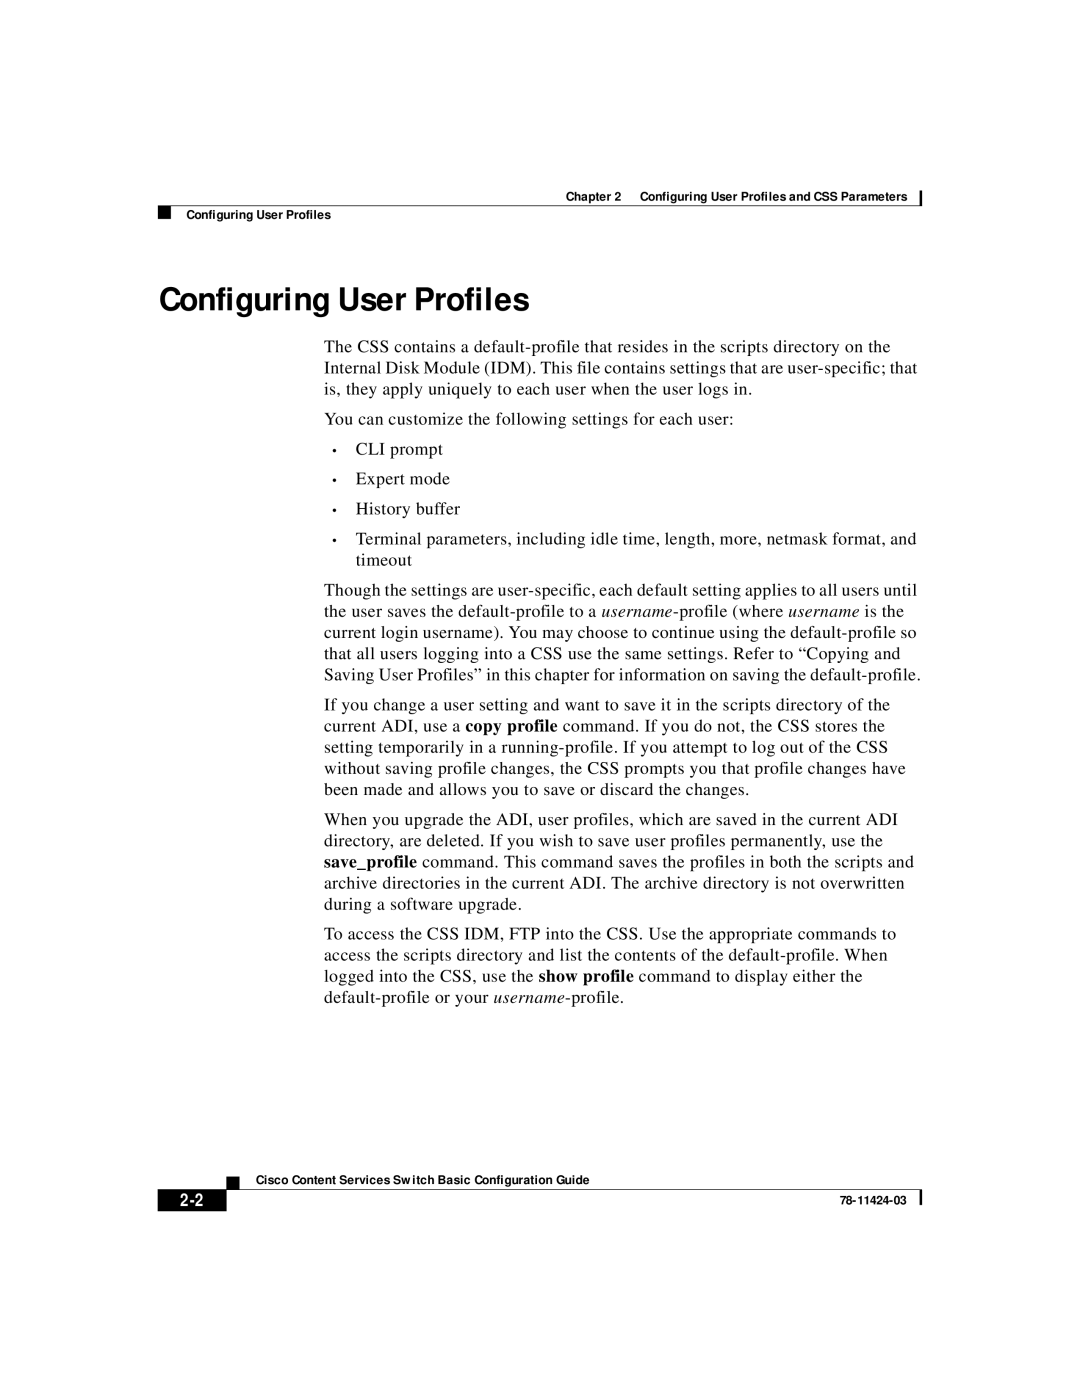 Cisco Systems 78-11424-03 manual Configuring User Profiles 